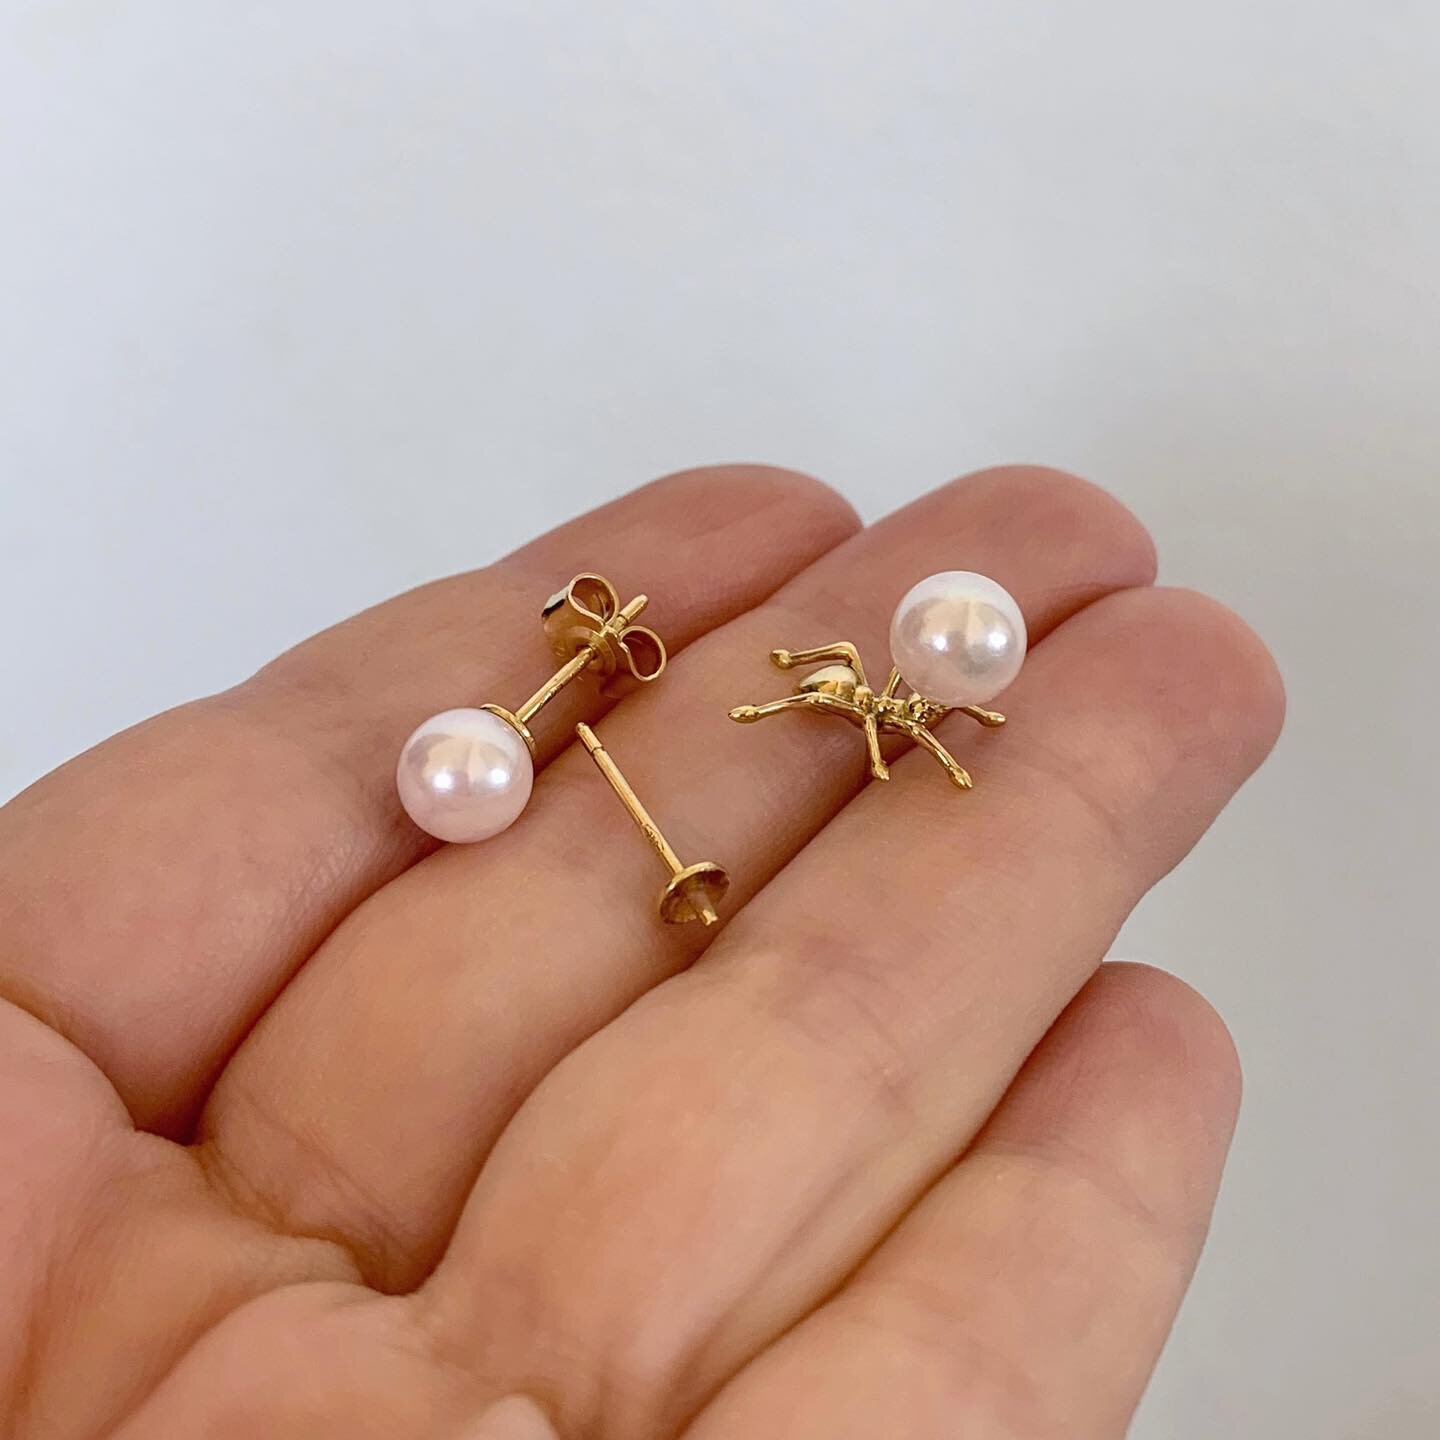 Thieves Stud Earrings in progress - 18ct gold and Akoya pearls 🐜
⚪️
⚪️
⚪️
⚪️
#pearlearrings #ant #beastie #surrealjewelry #surreal #franceswadsworthjones #pearls #finejewellery #finejewlry #bespoke